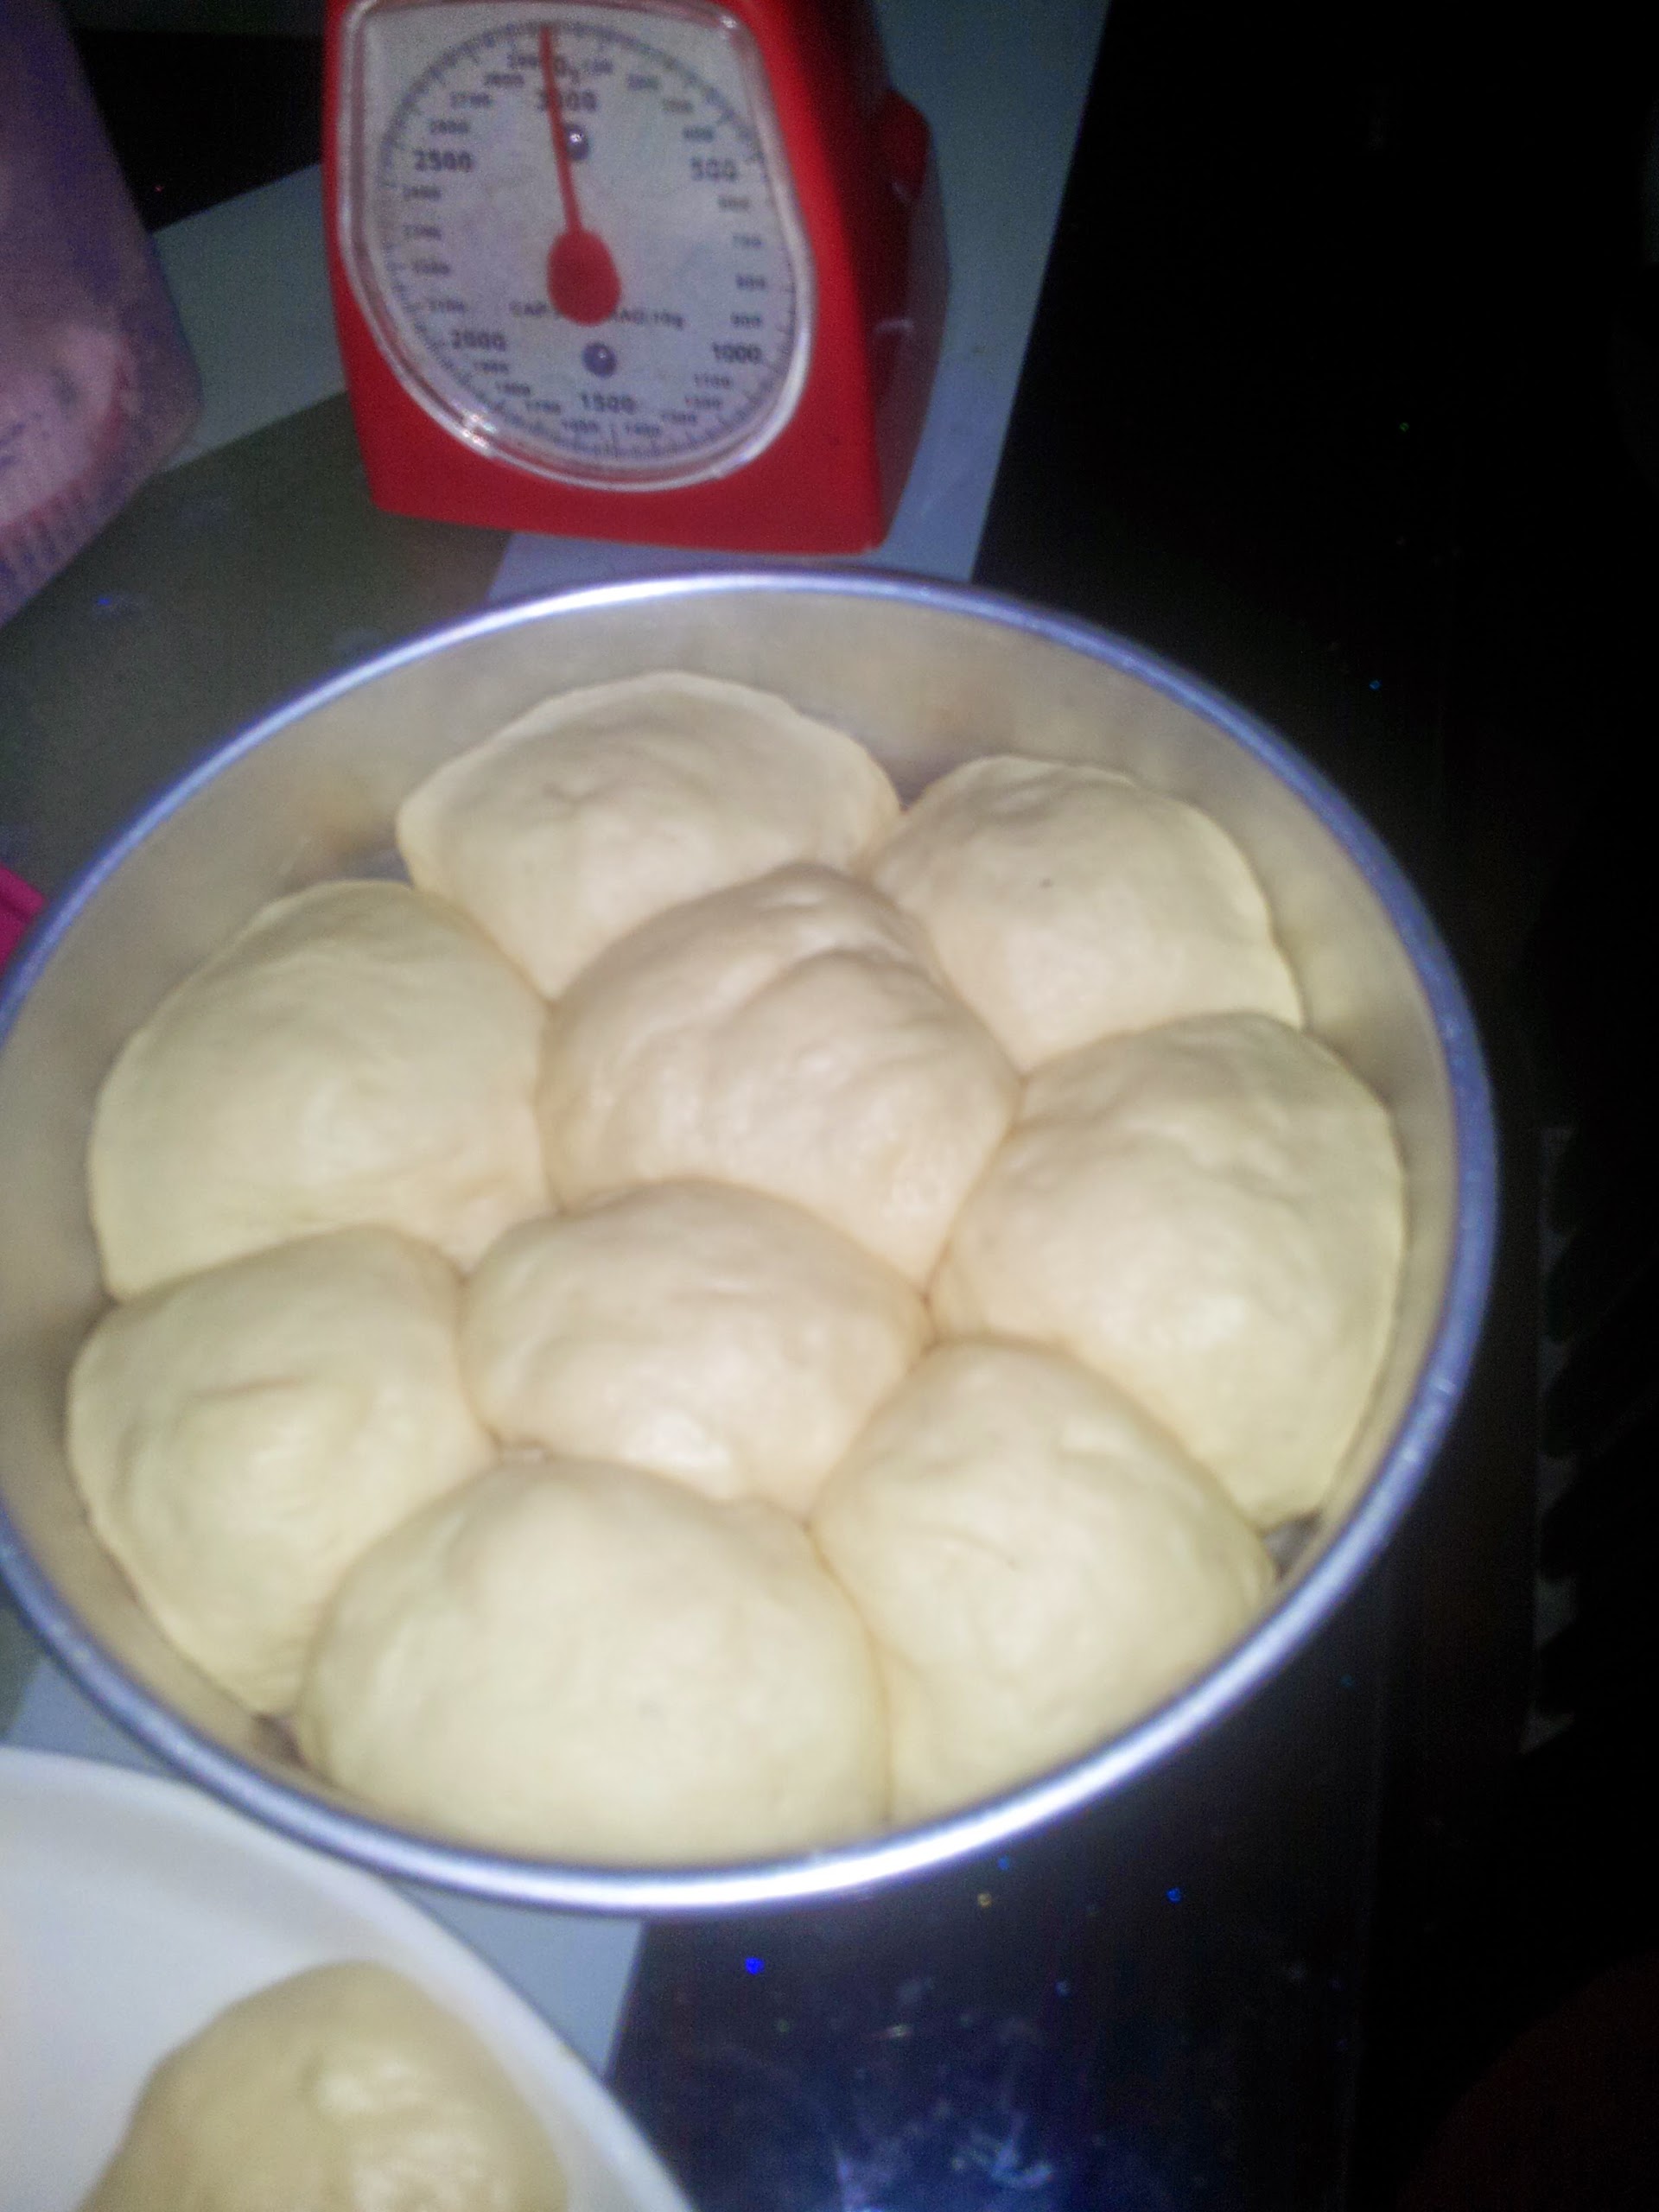 It's My Life: Resepi bun/roti manis guna breadmaker.